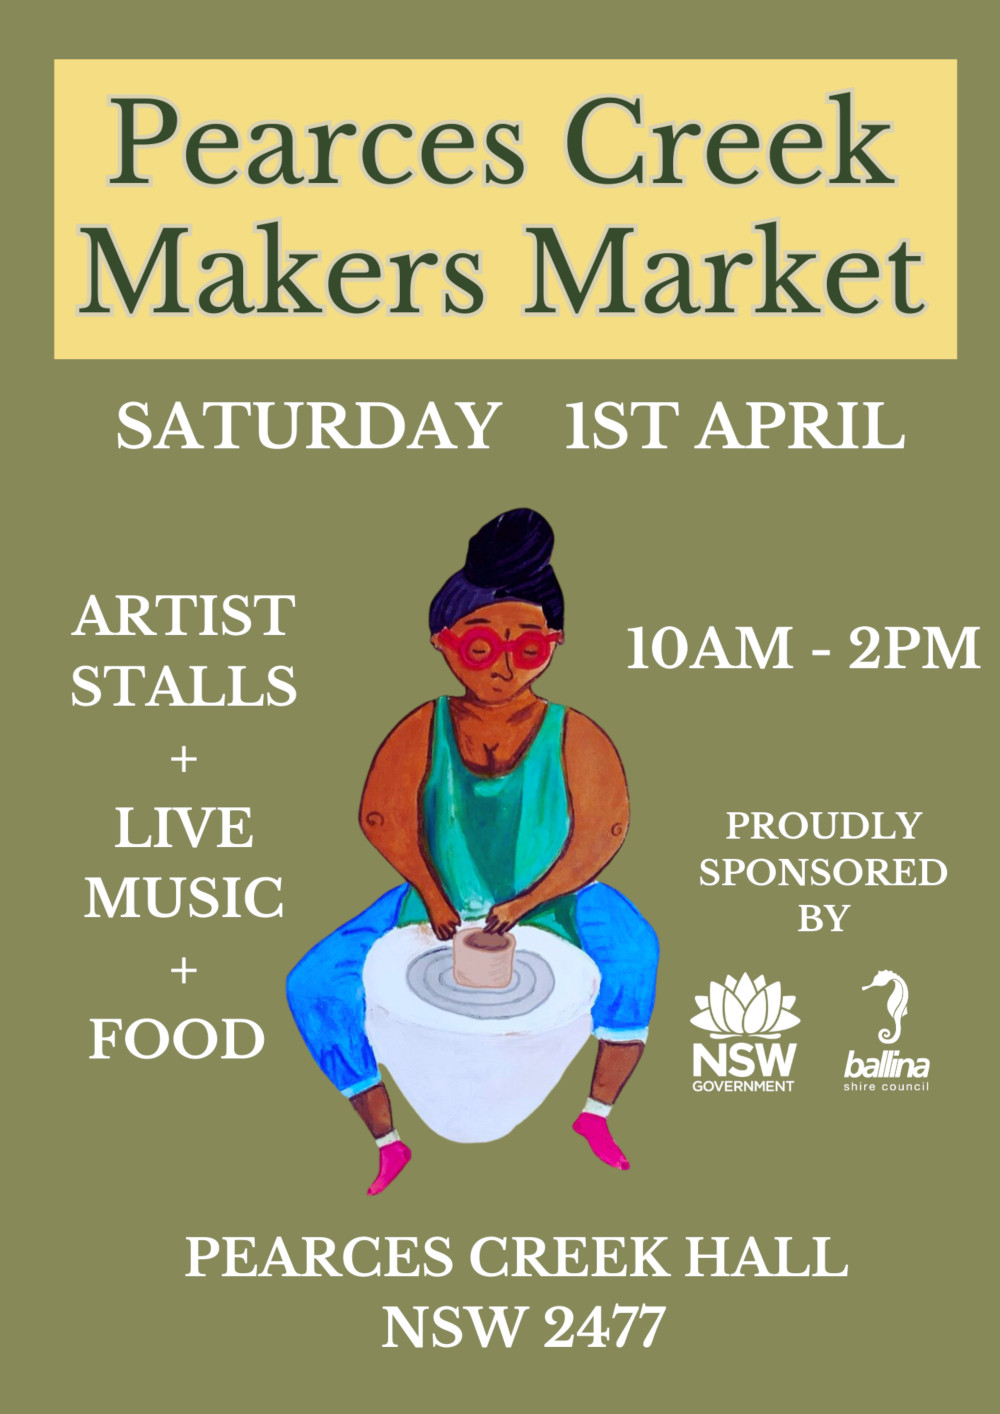 Pearces Creek Hall Makers Market April 1st